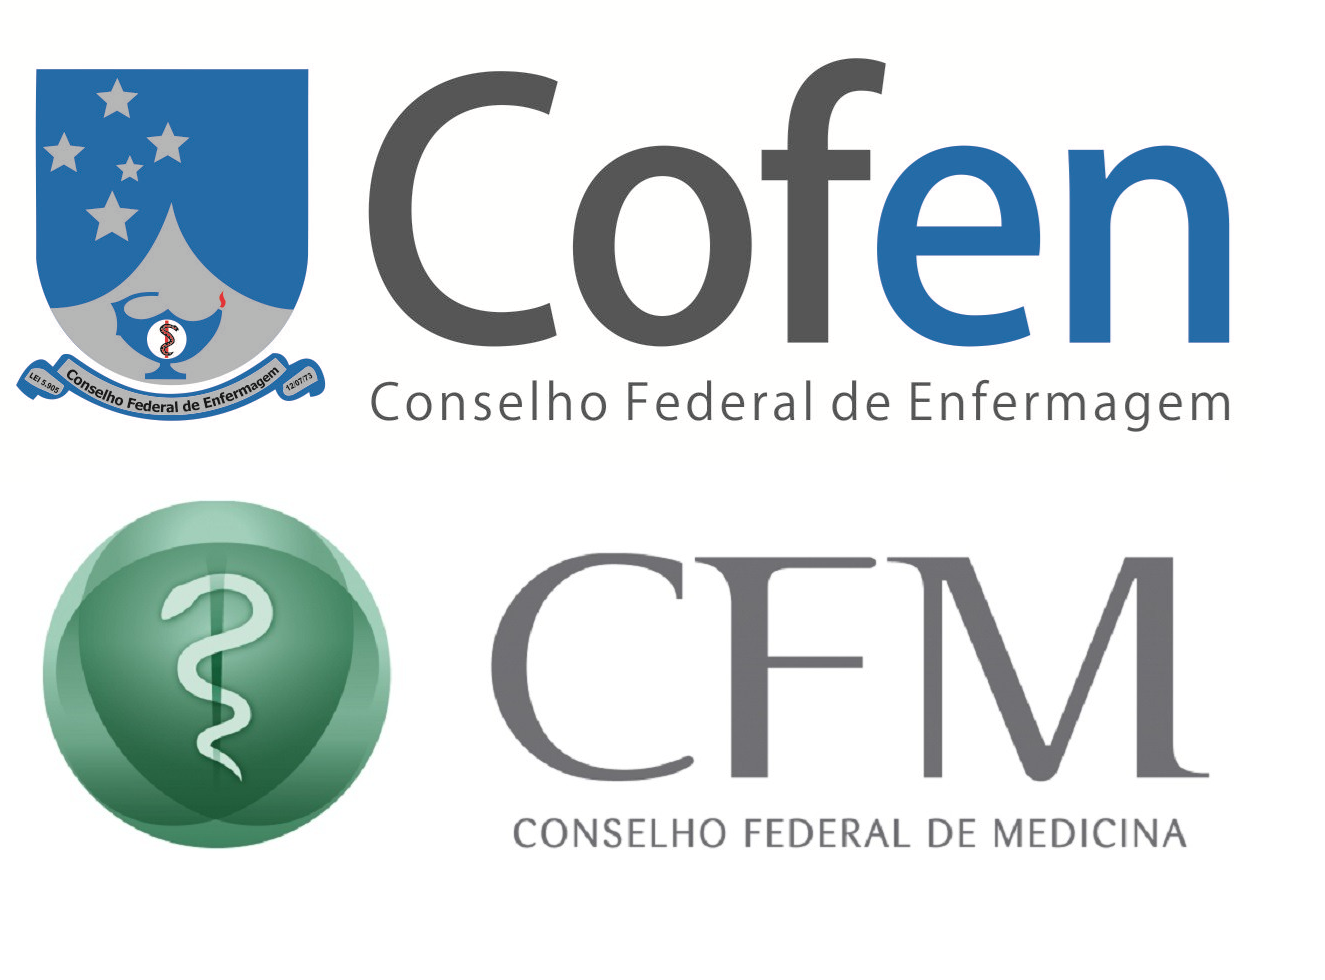 Marcas de ambos, Conselho Federal de Enfermagem e Conselho Federal de Medicina